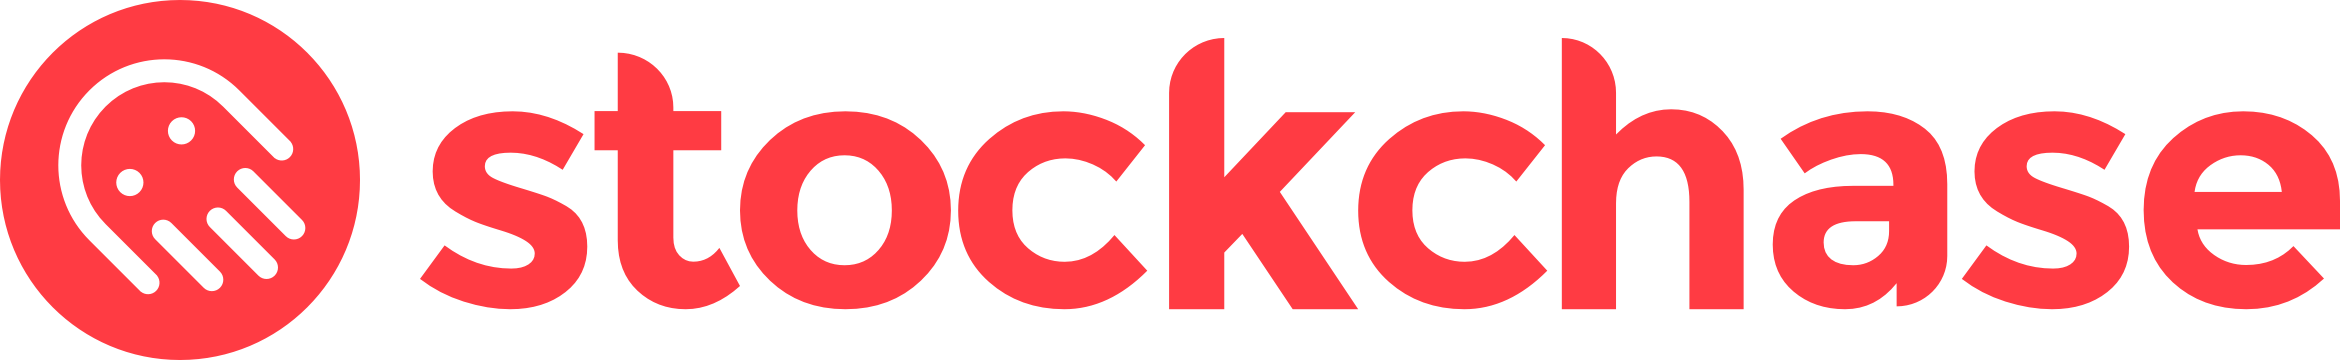 Stockchase Logo